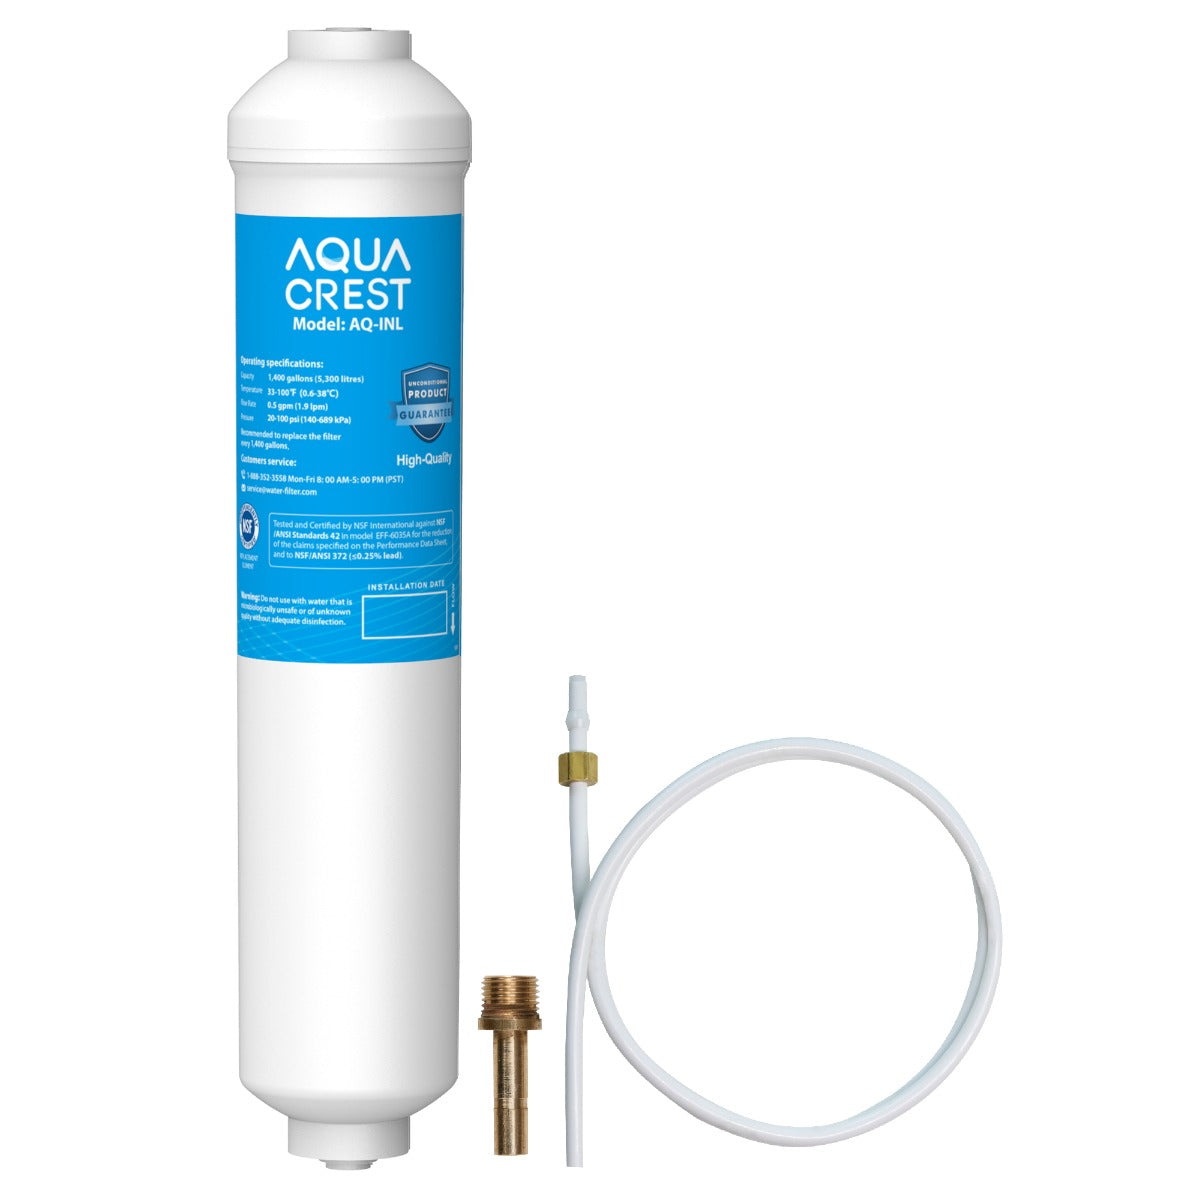 Should You Buy? AquaCrest Fridge Inline Water Filter 